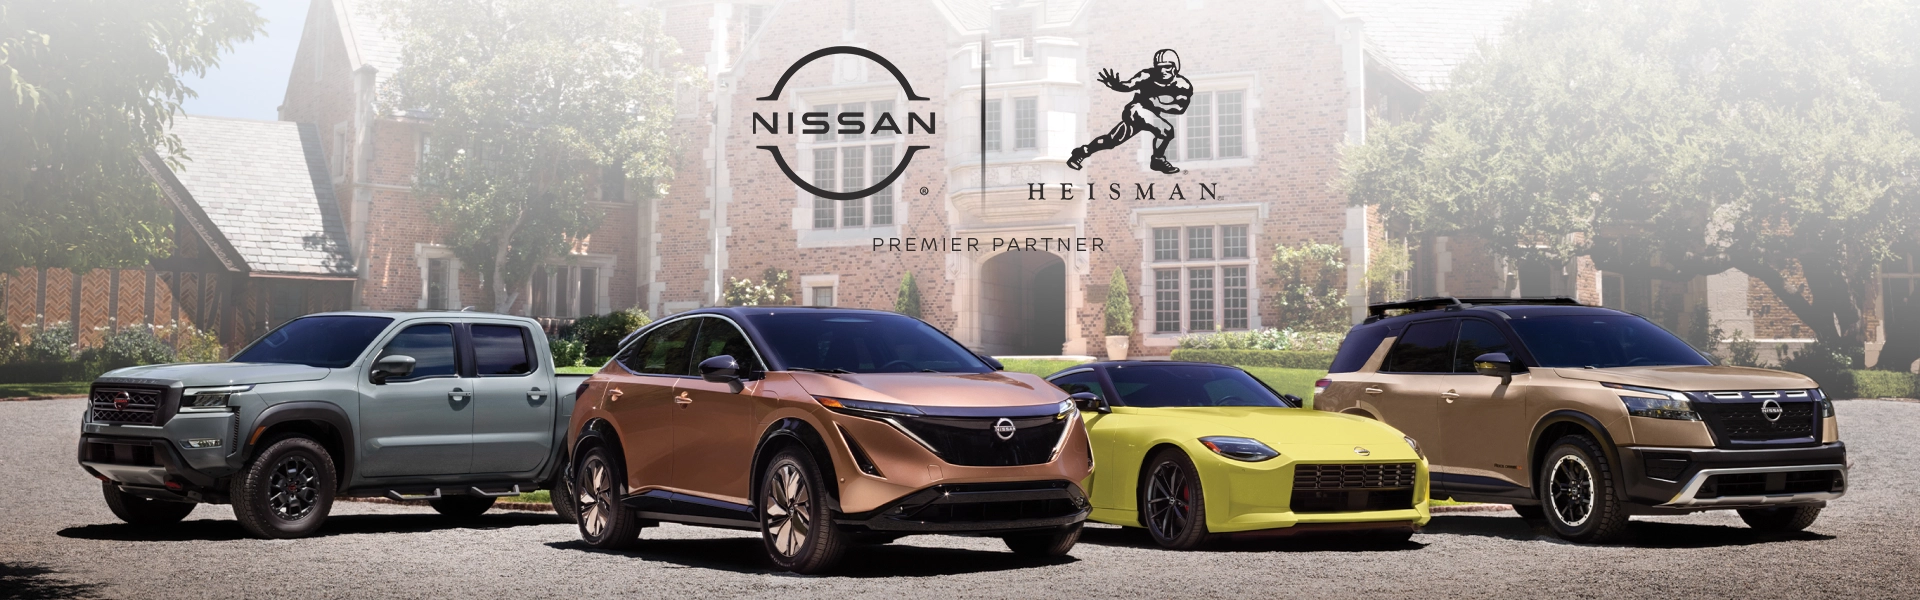 Nissan is a Premier Partner of Heisman